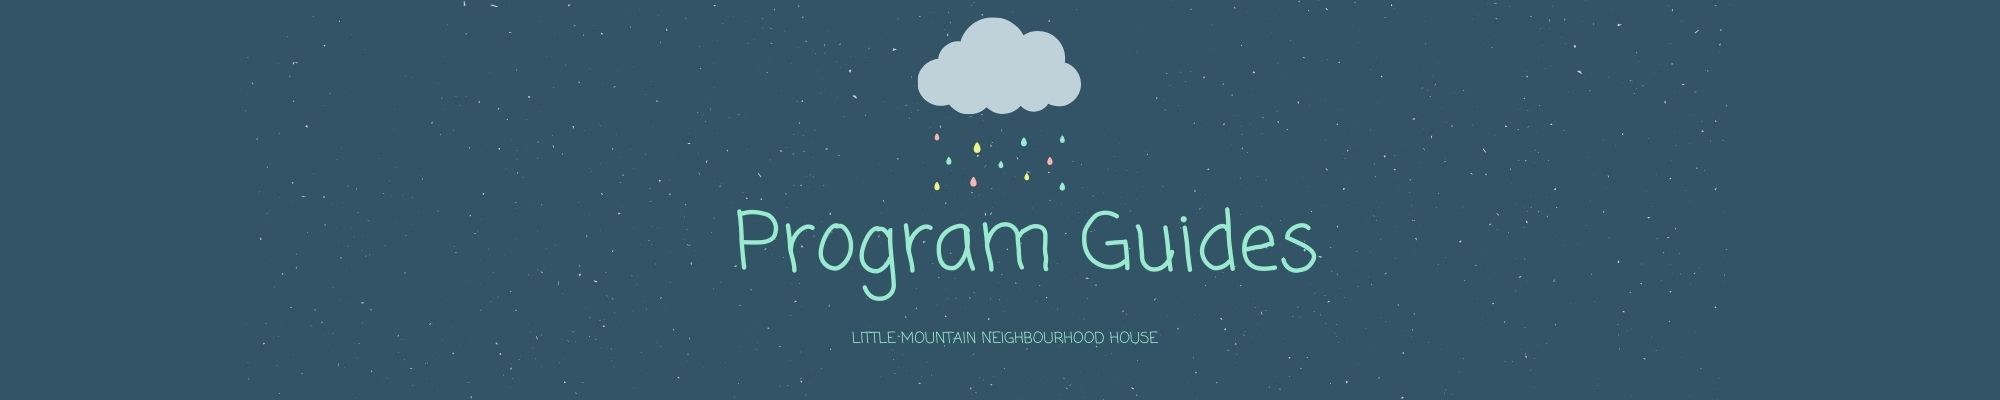 Program Guides